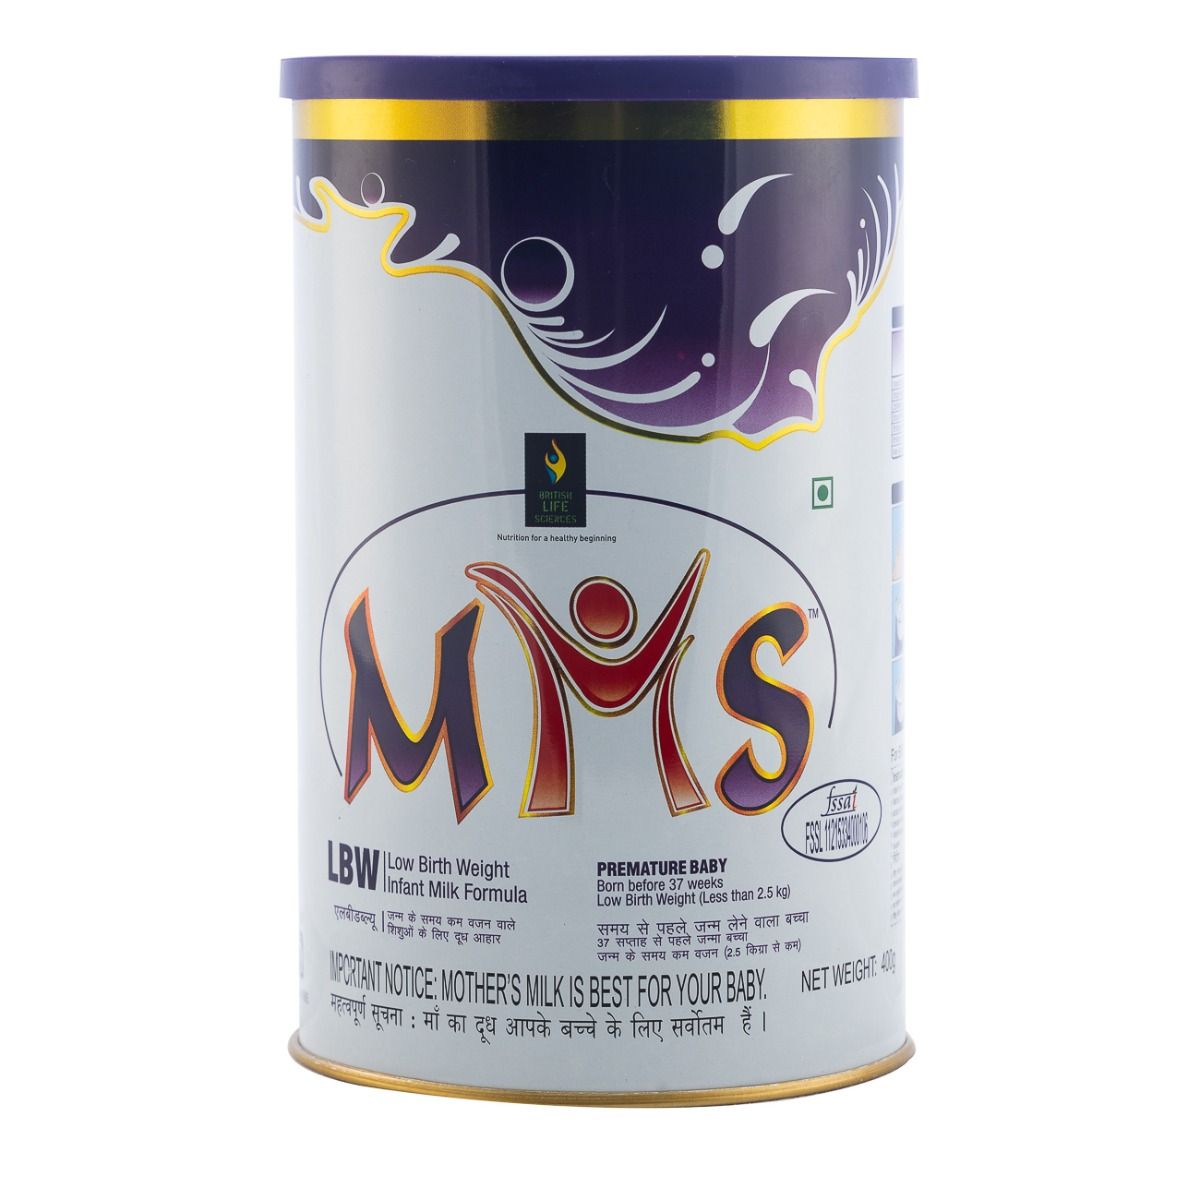 MMS Low Birth Weight Infant Milk Formula Powder, 400 gm, Pack of 1 